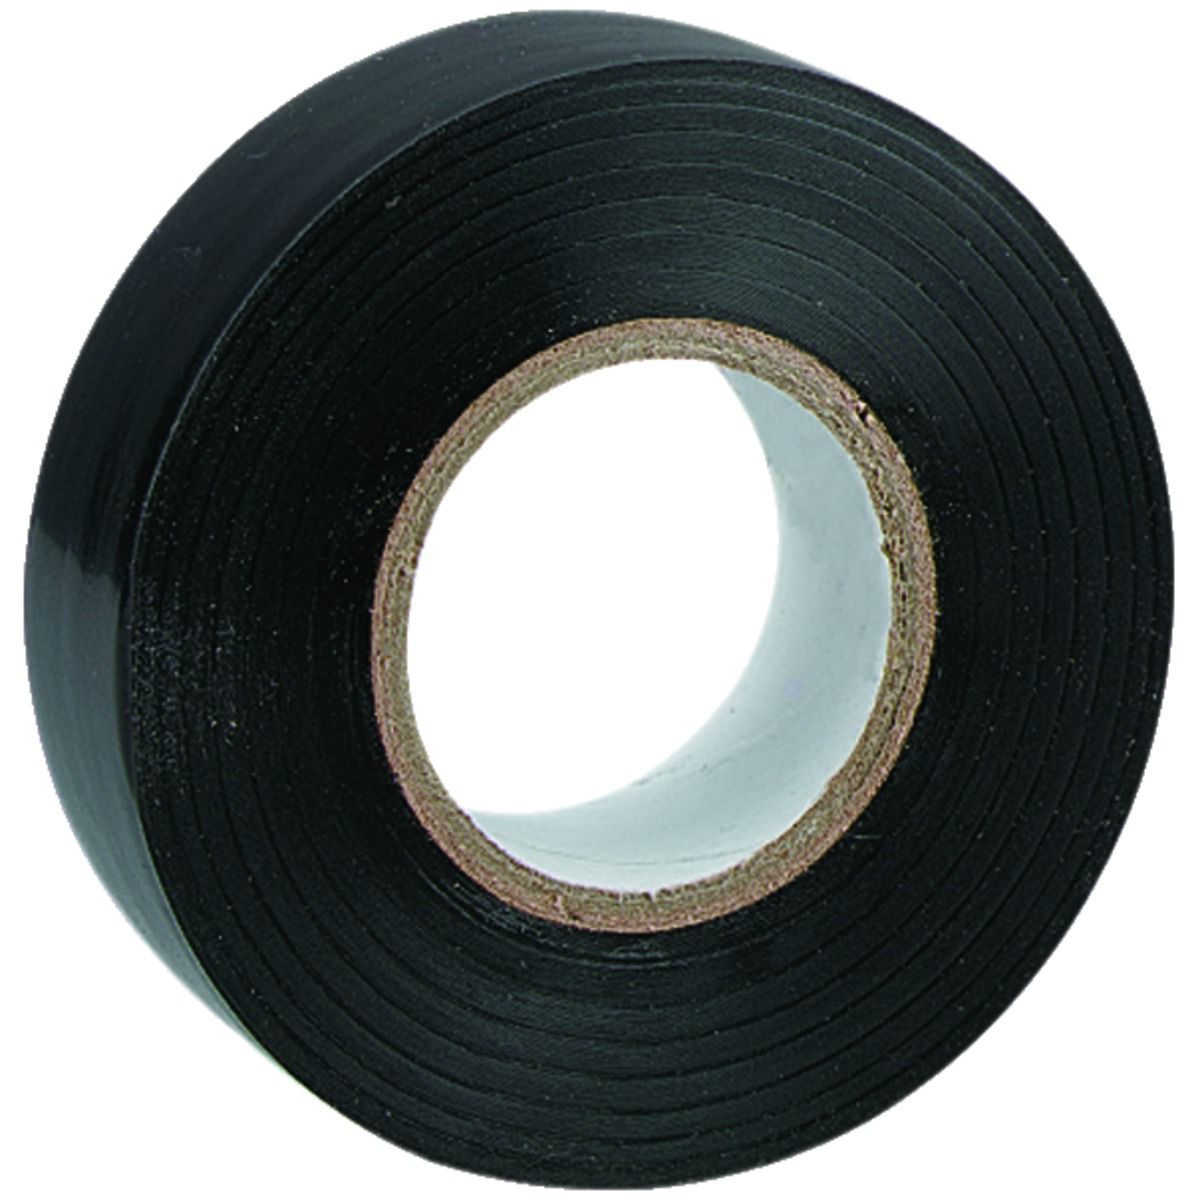 Image of Deta Black PVC Electrical Insulation Tape - 20m x 19mm